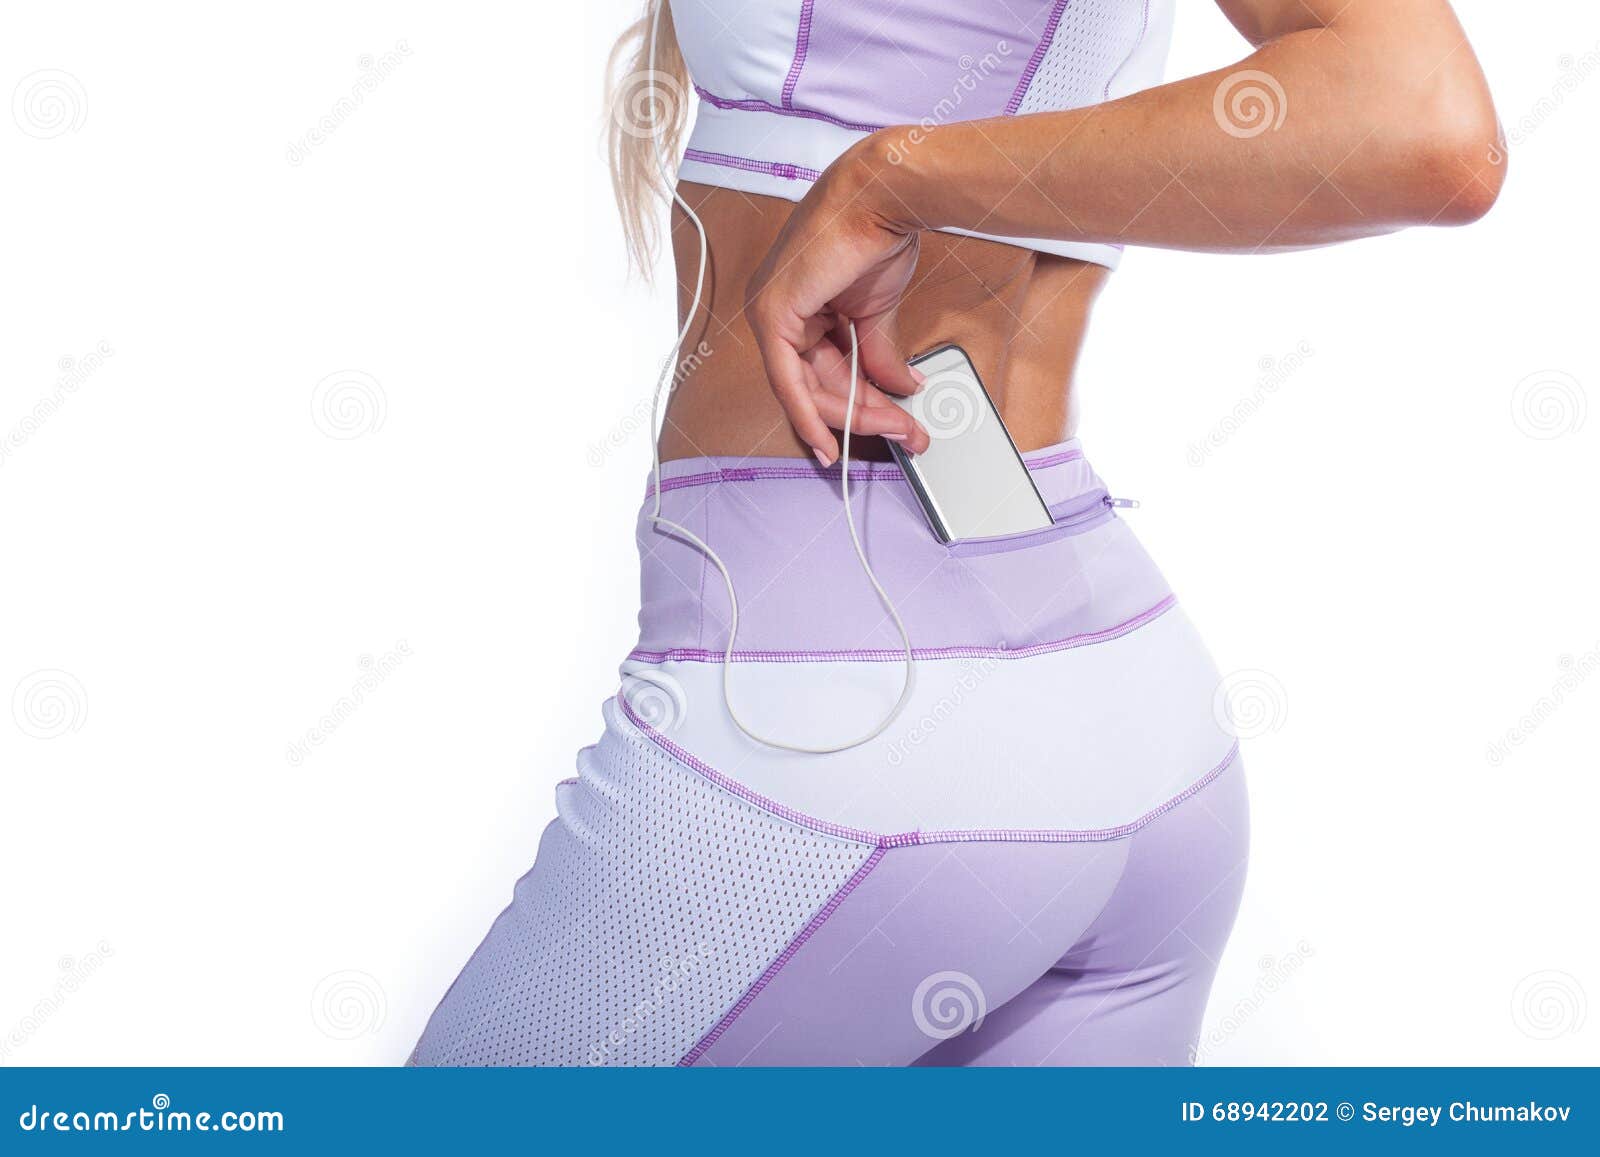 https://thumbs.dreamstime.com/z/woman-yoga-pants-music-player-pocket-back-view-pink-sportswear-68942202.jpg